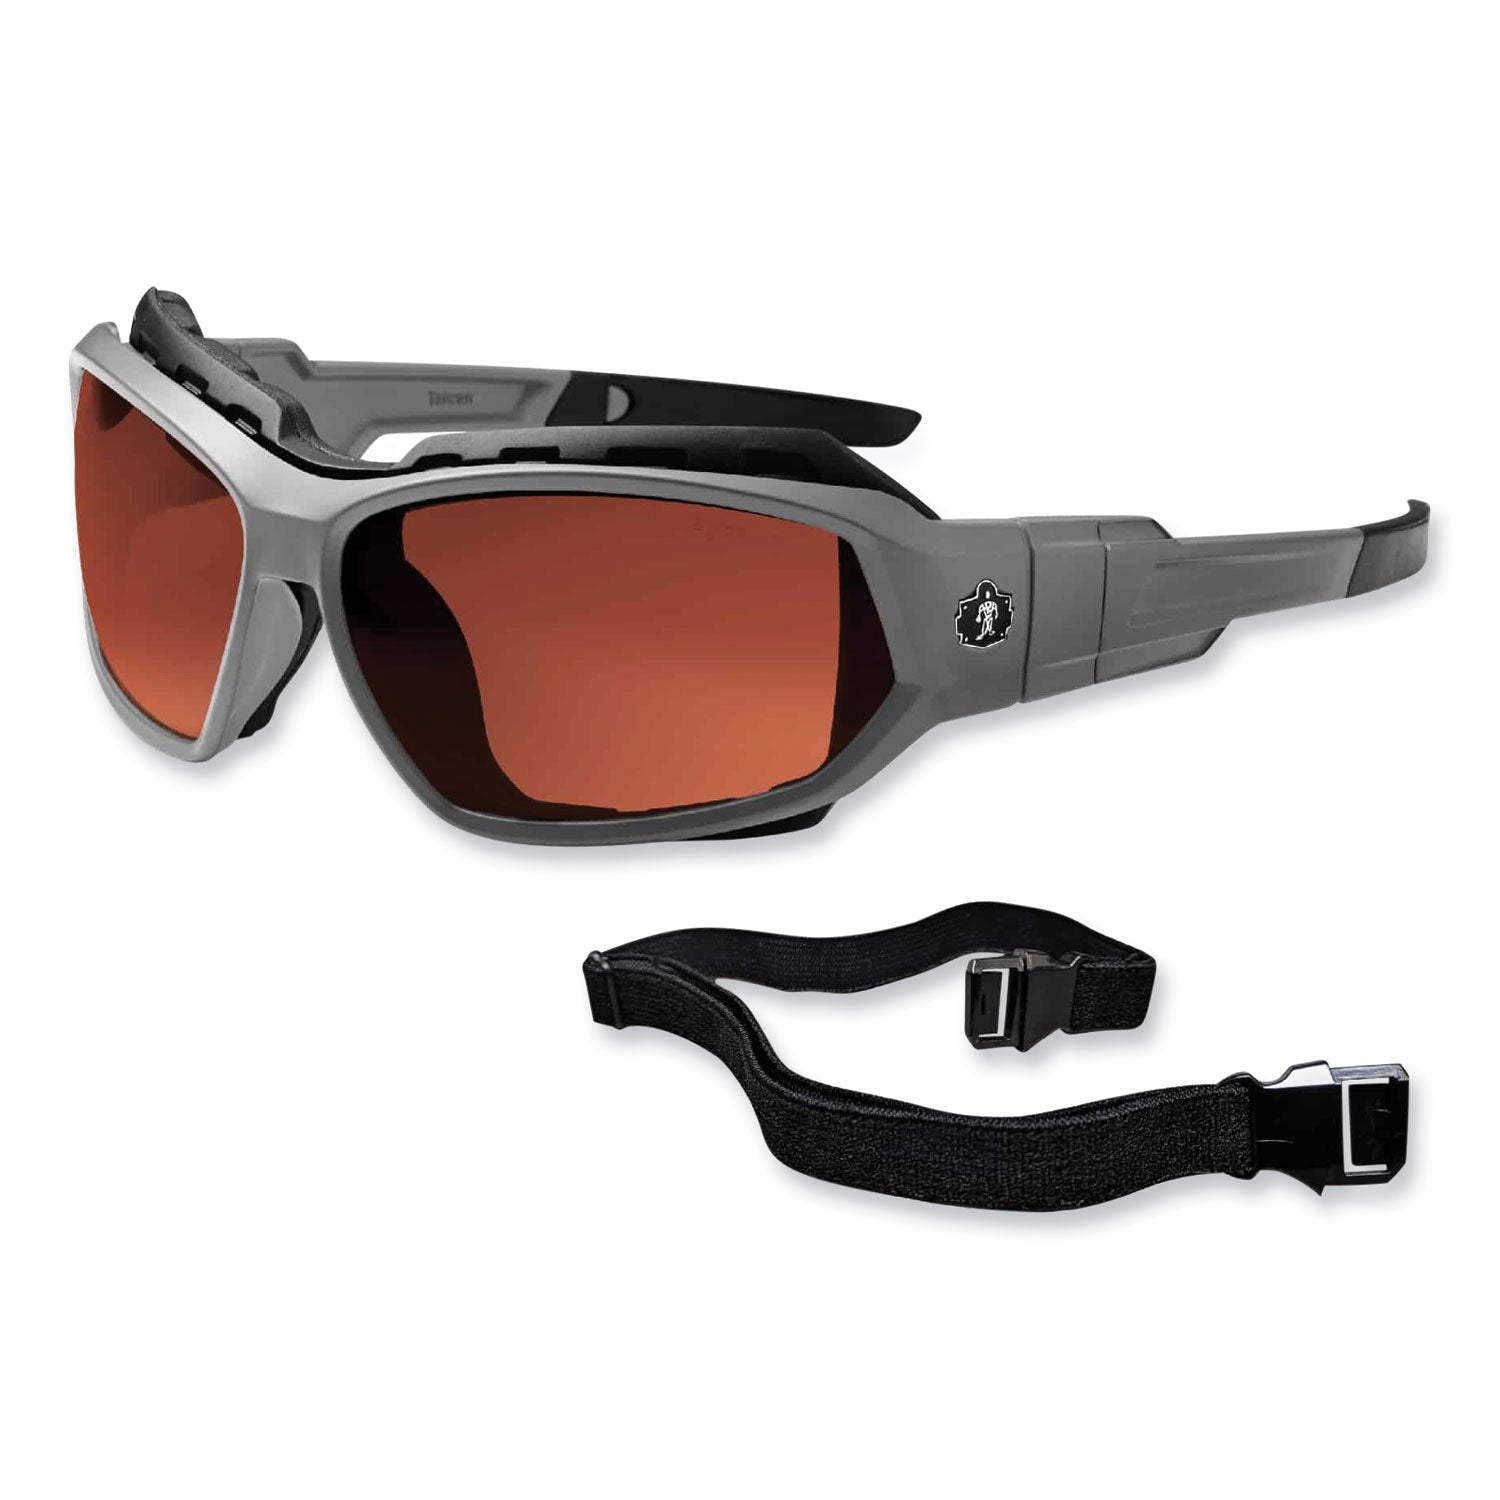 skullerz-loki-safety-glasses-goggles-gray-nylon-impact-frame-polarized-copper-polycarb-lens-ships-in-1-3-business-days_ego56121 - 3